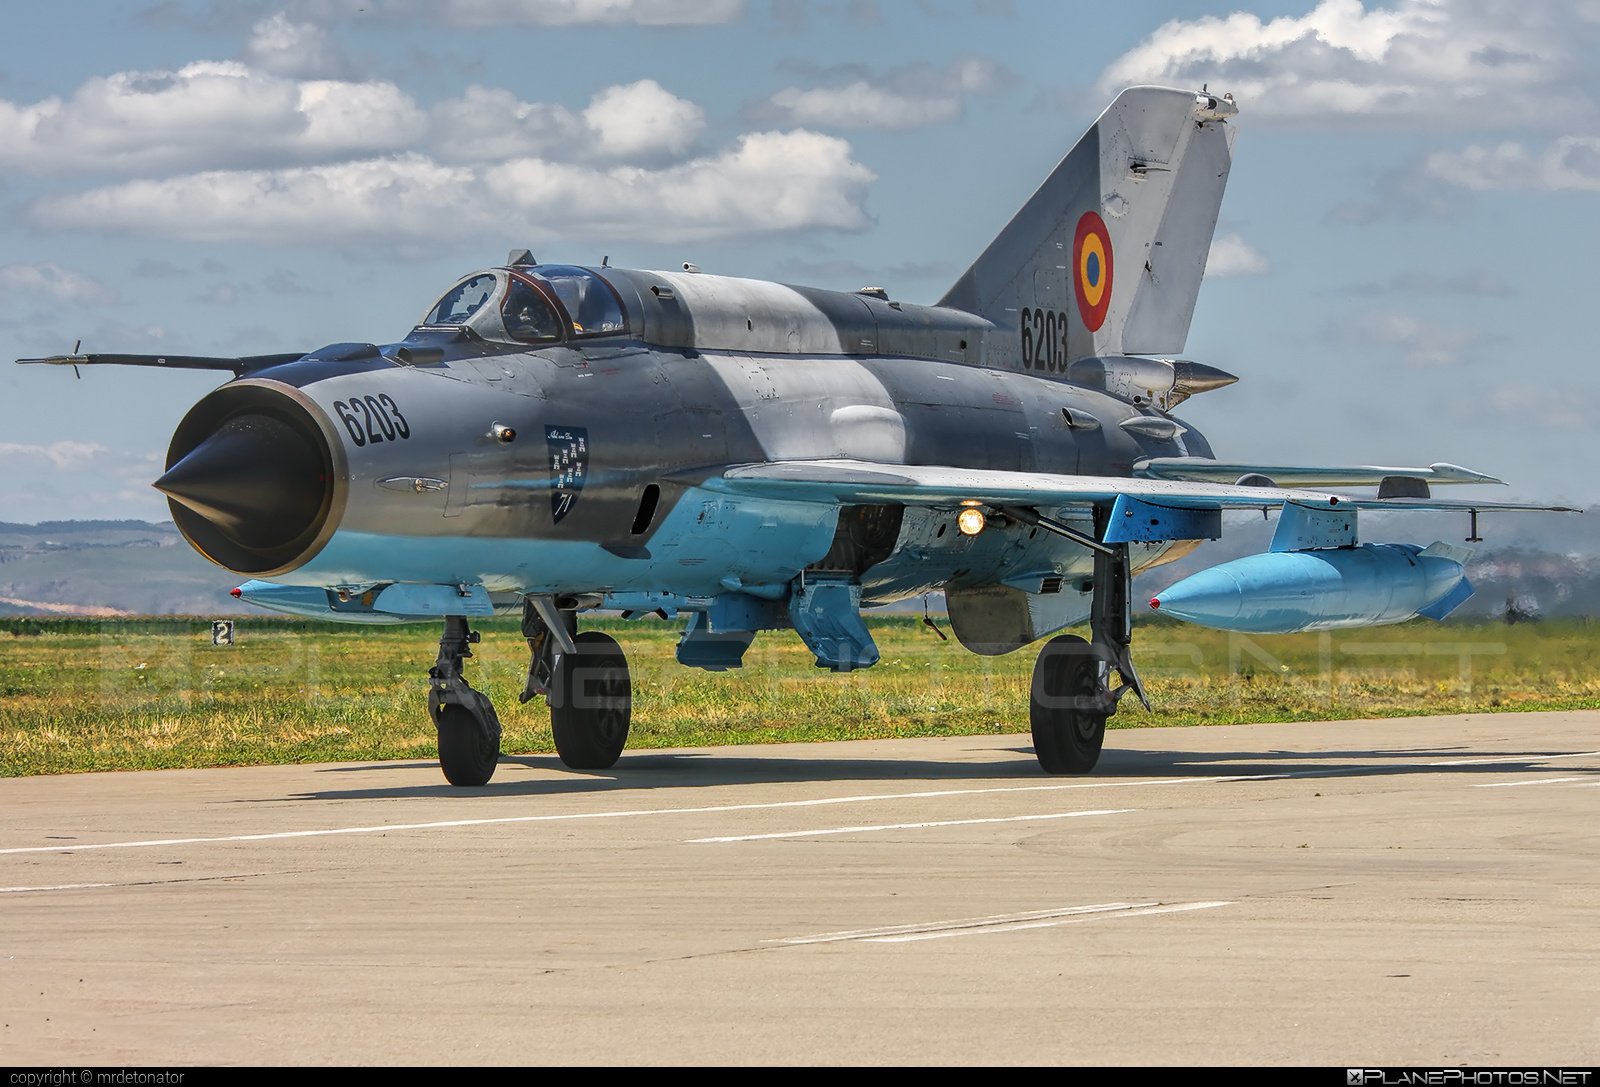 Mikoyan-Gurevich MiG-21MF - 6203 operated by Forţele Aeriene Române (Romanian Air Force) #forteleaerieneromane #mig #mig21 #mig21mf #mikoyangurevich #romanianairforce